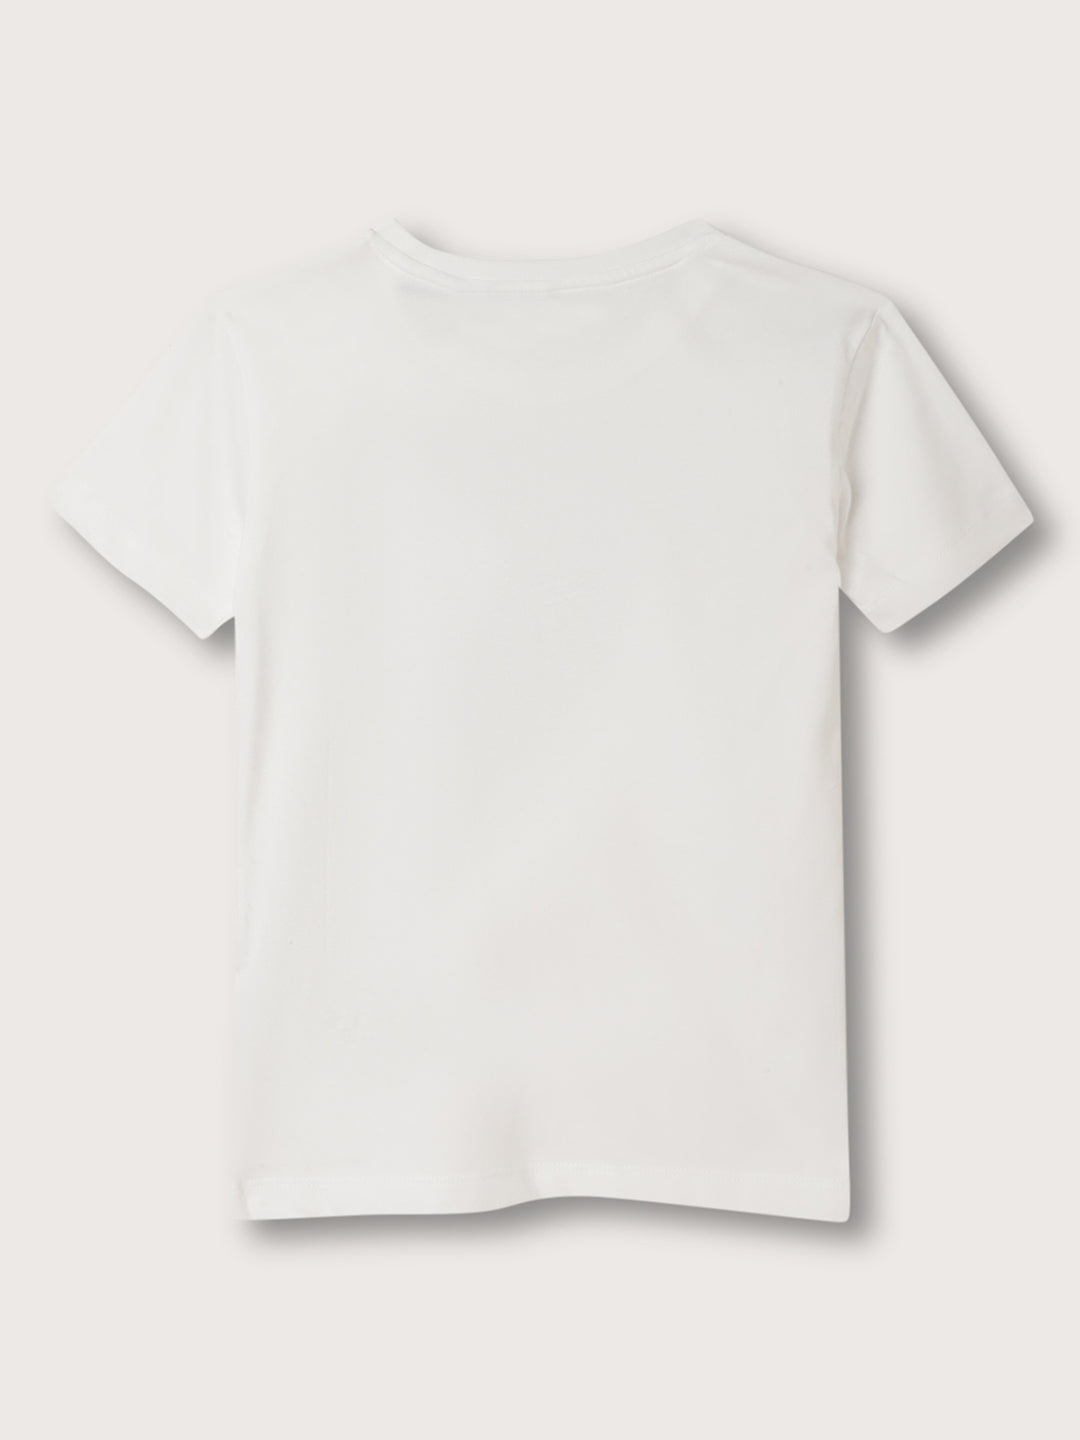 Gant Boys Printed Round Neck Cotton T-shirt